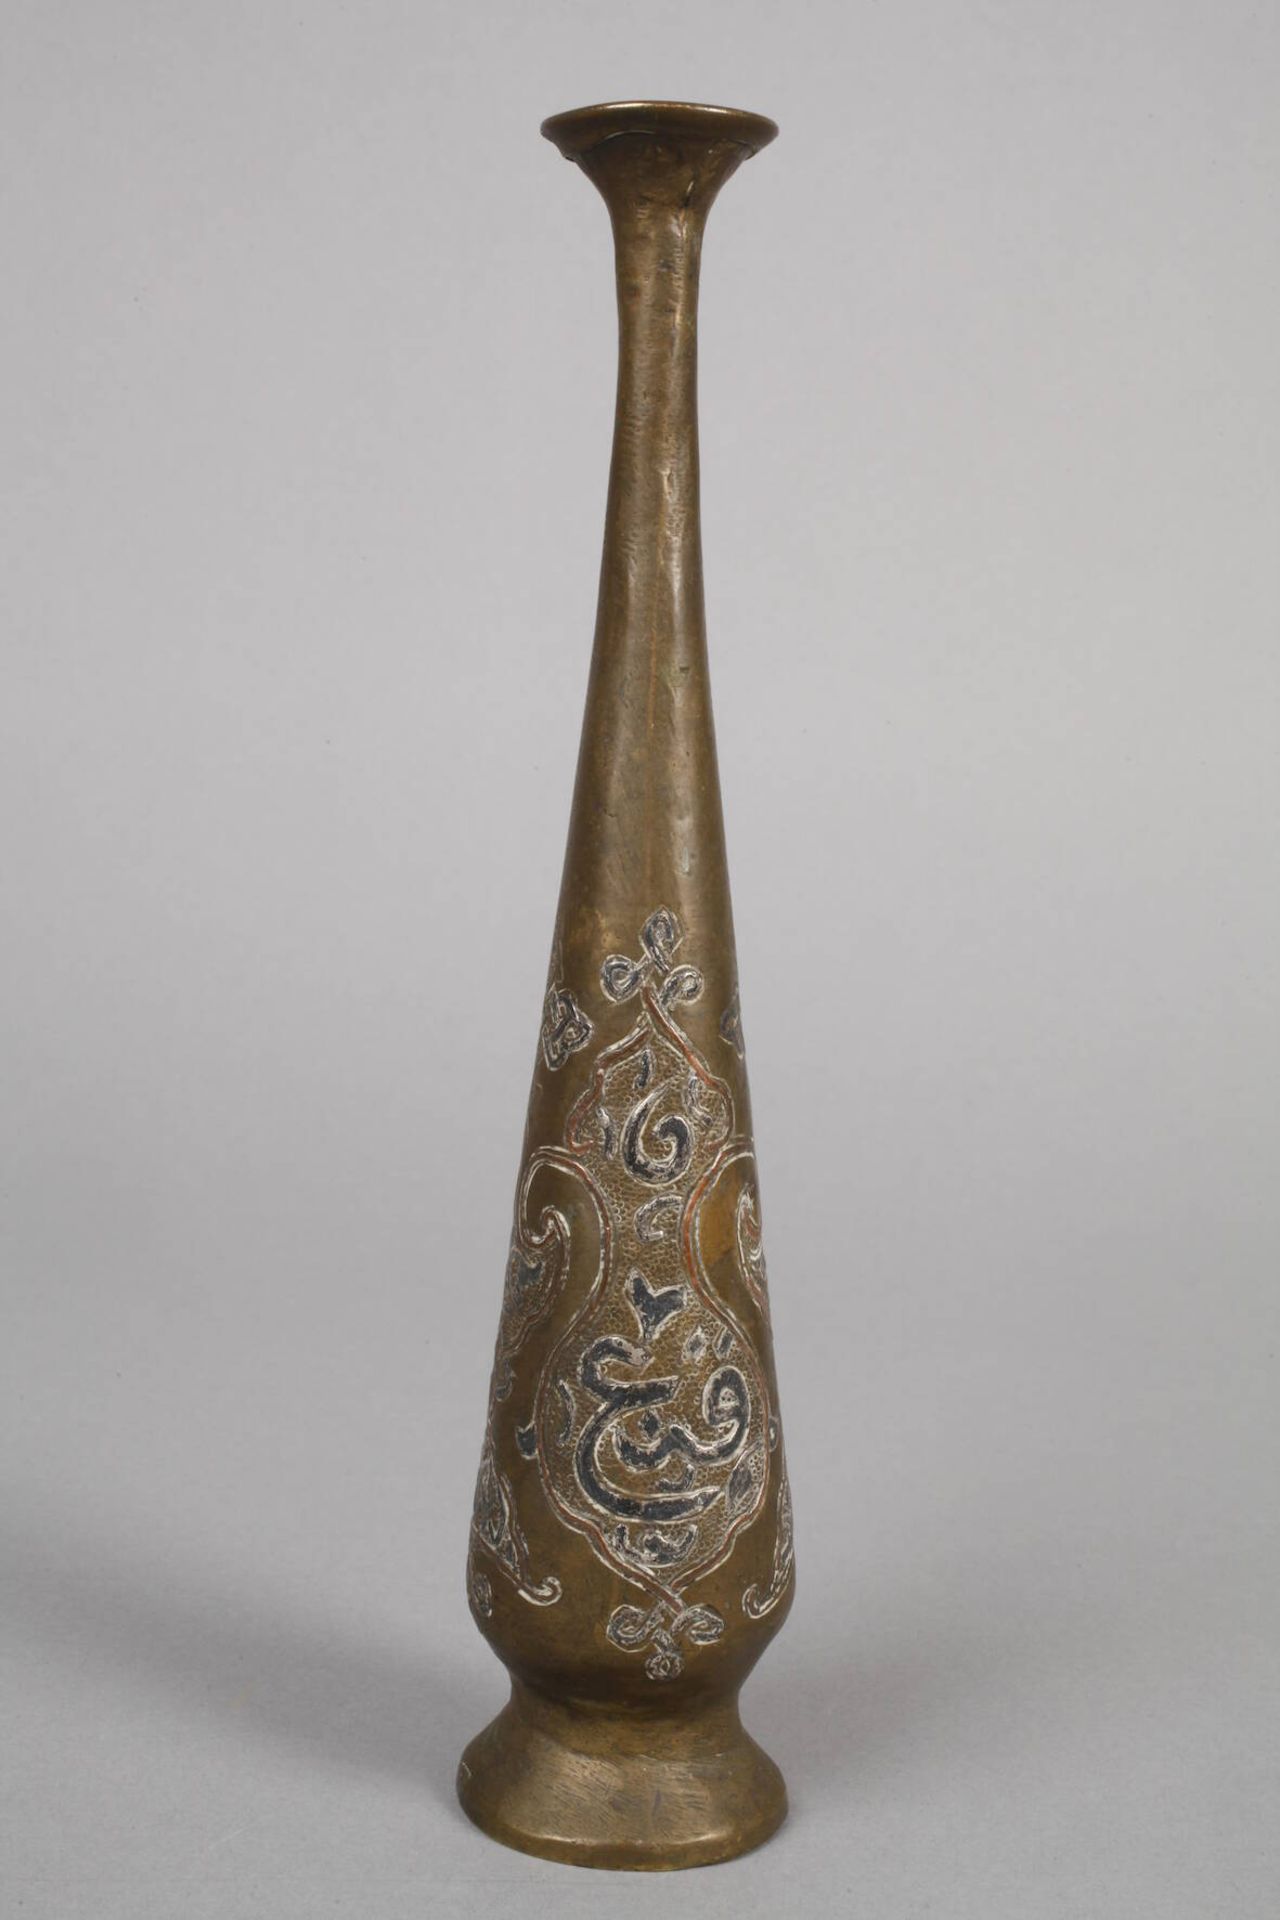 Persische Ziervase Anfang 20. Jh., Messing gegossen, teils bronziert bzw. versilbert, schlanker, - Bild 2 aus 3